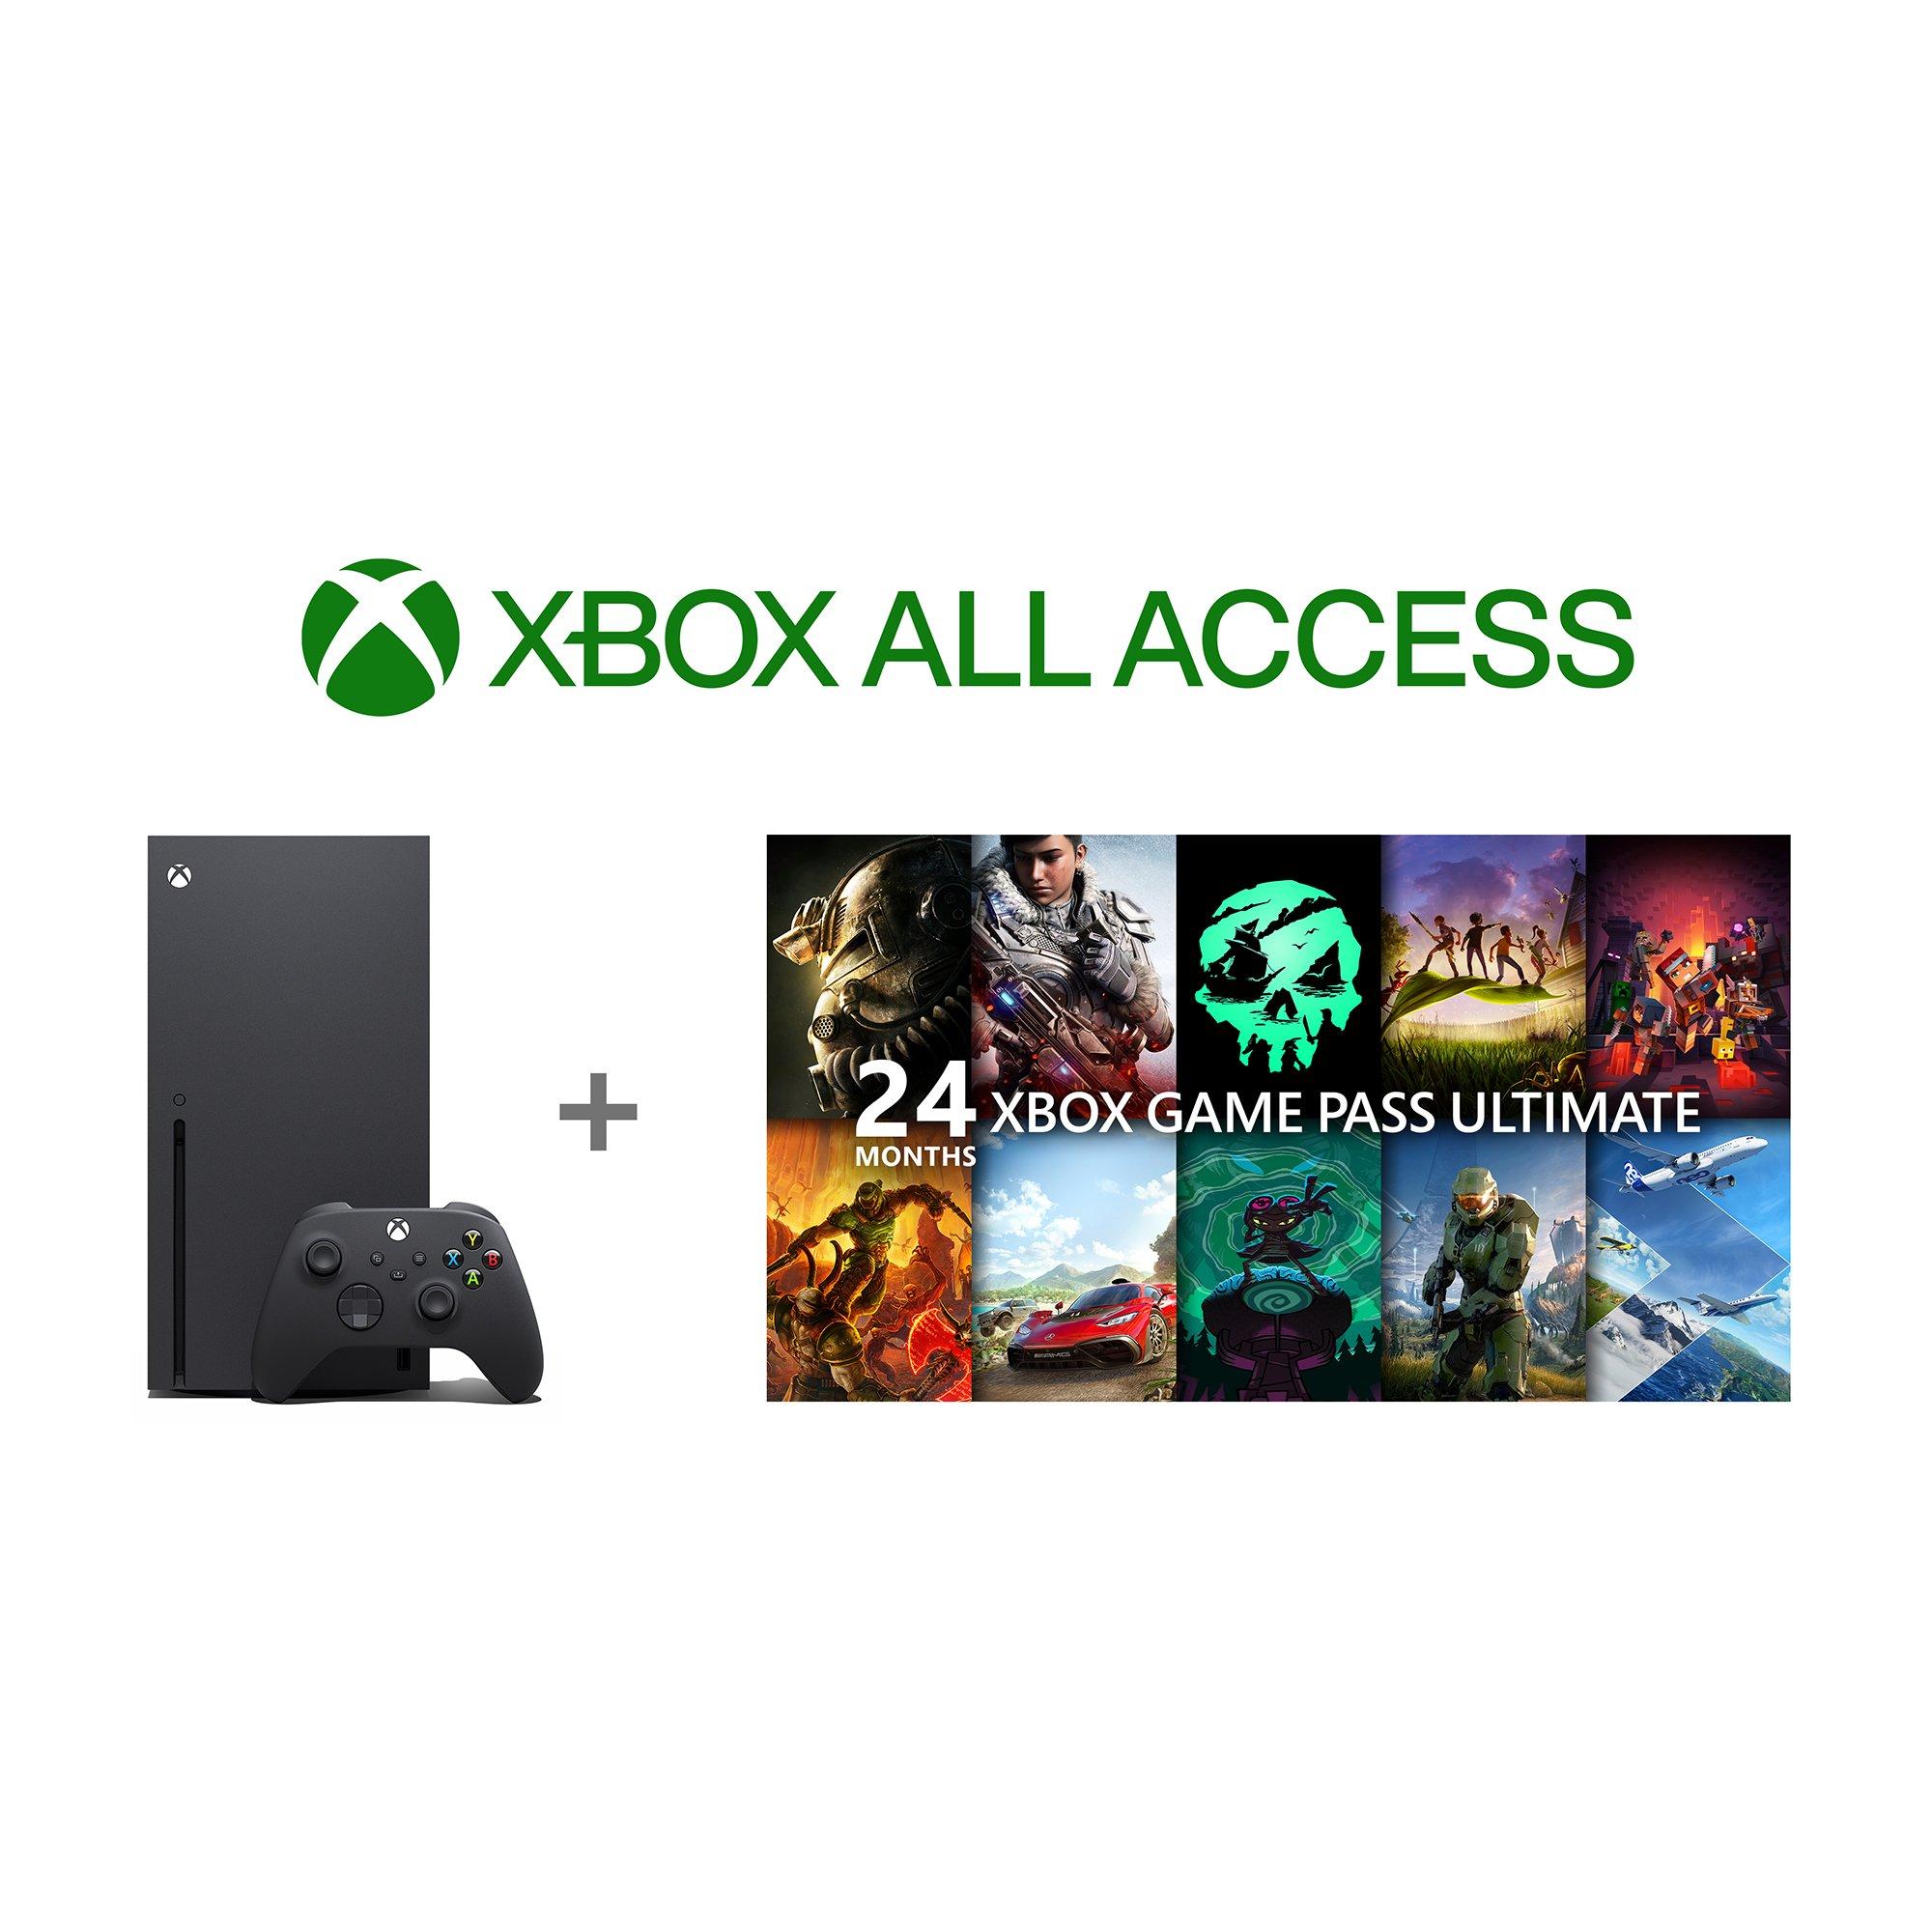 Detector Anual En detalle Microsoft - Xbox Series X Xbox All Access | GameStop